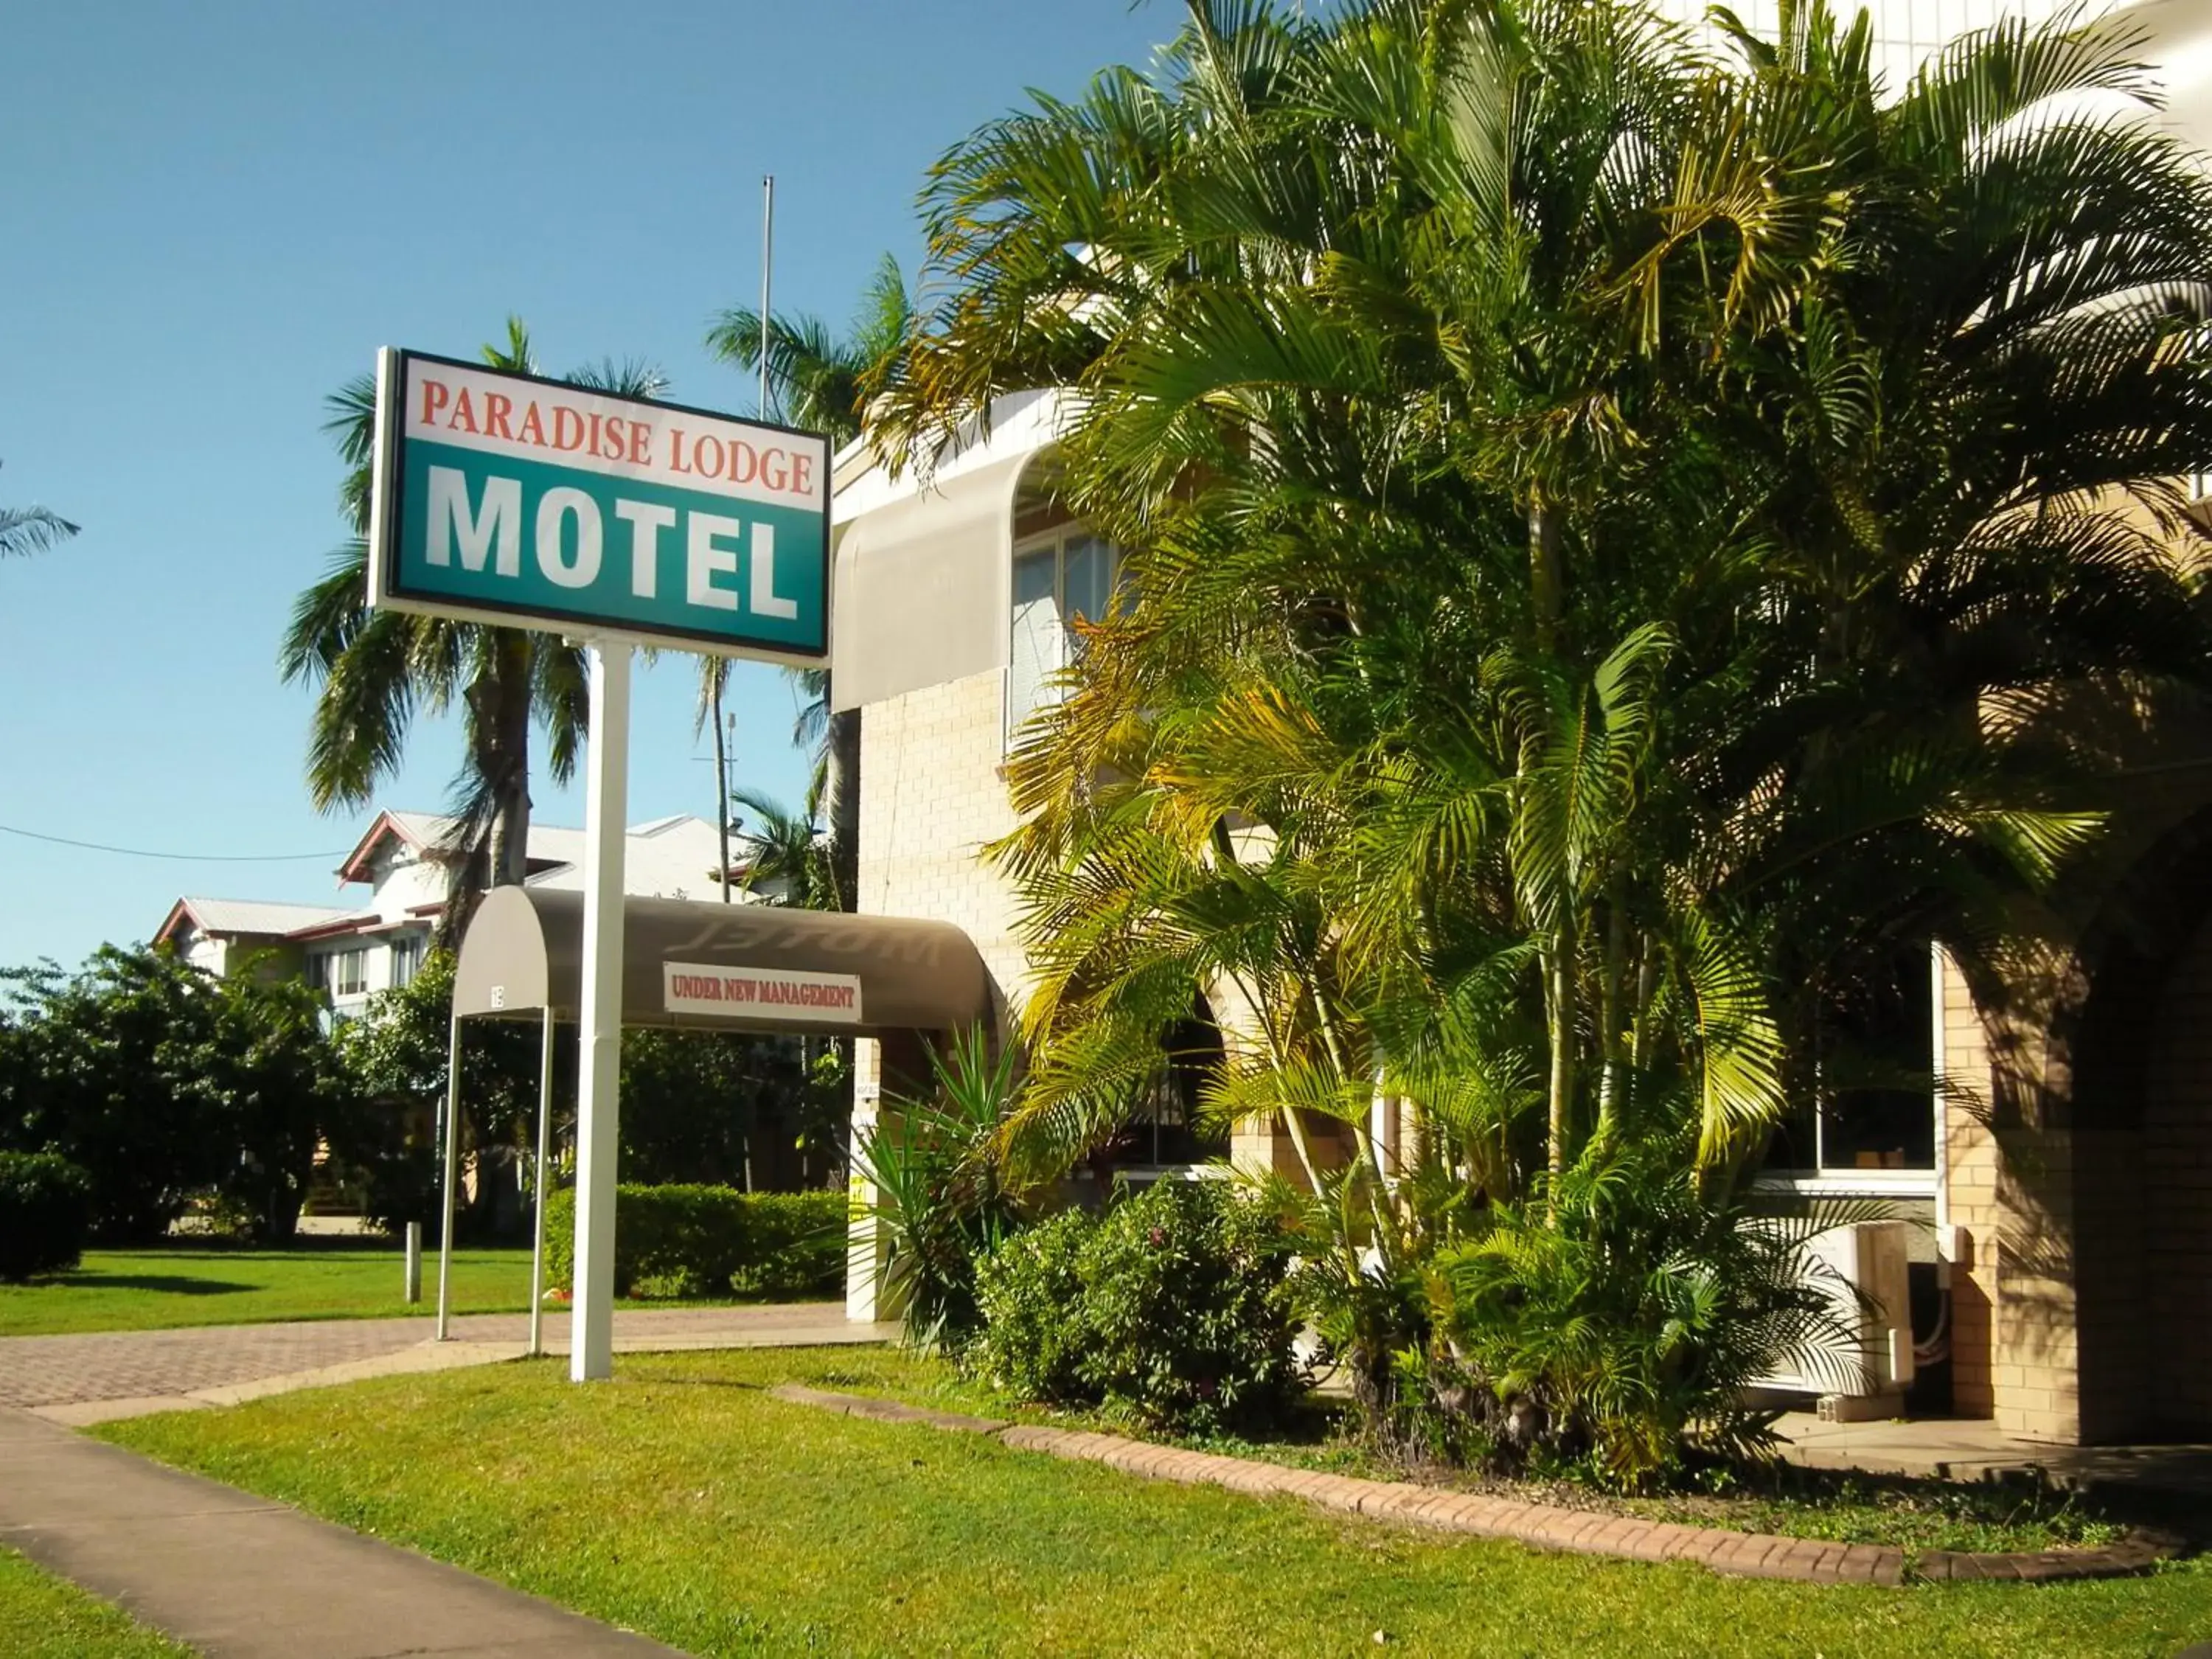 Property building, Garden in Paradise Motel